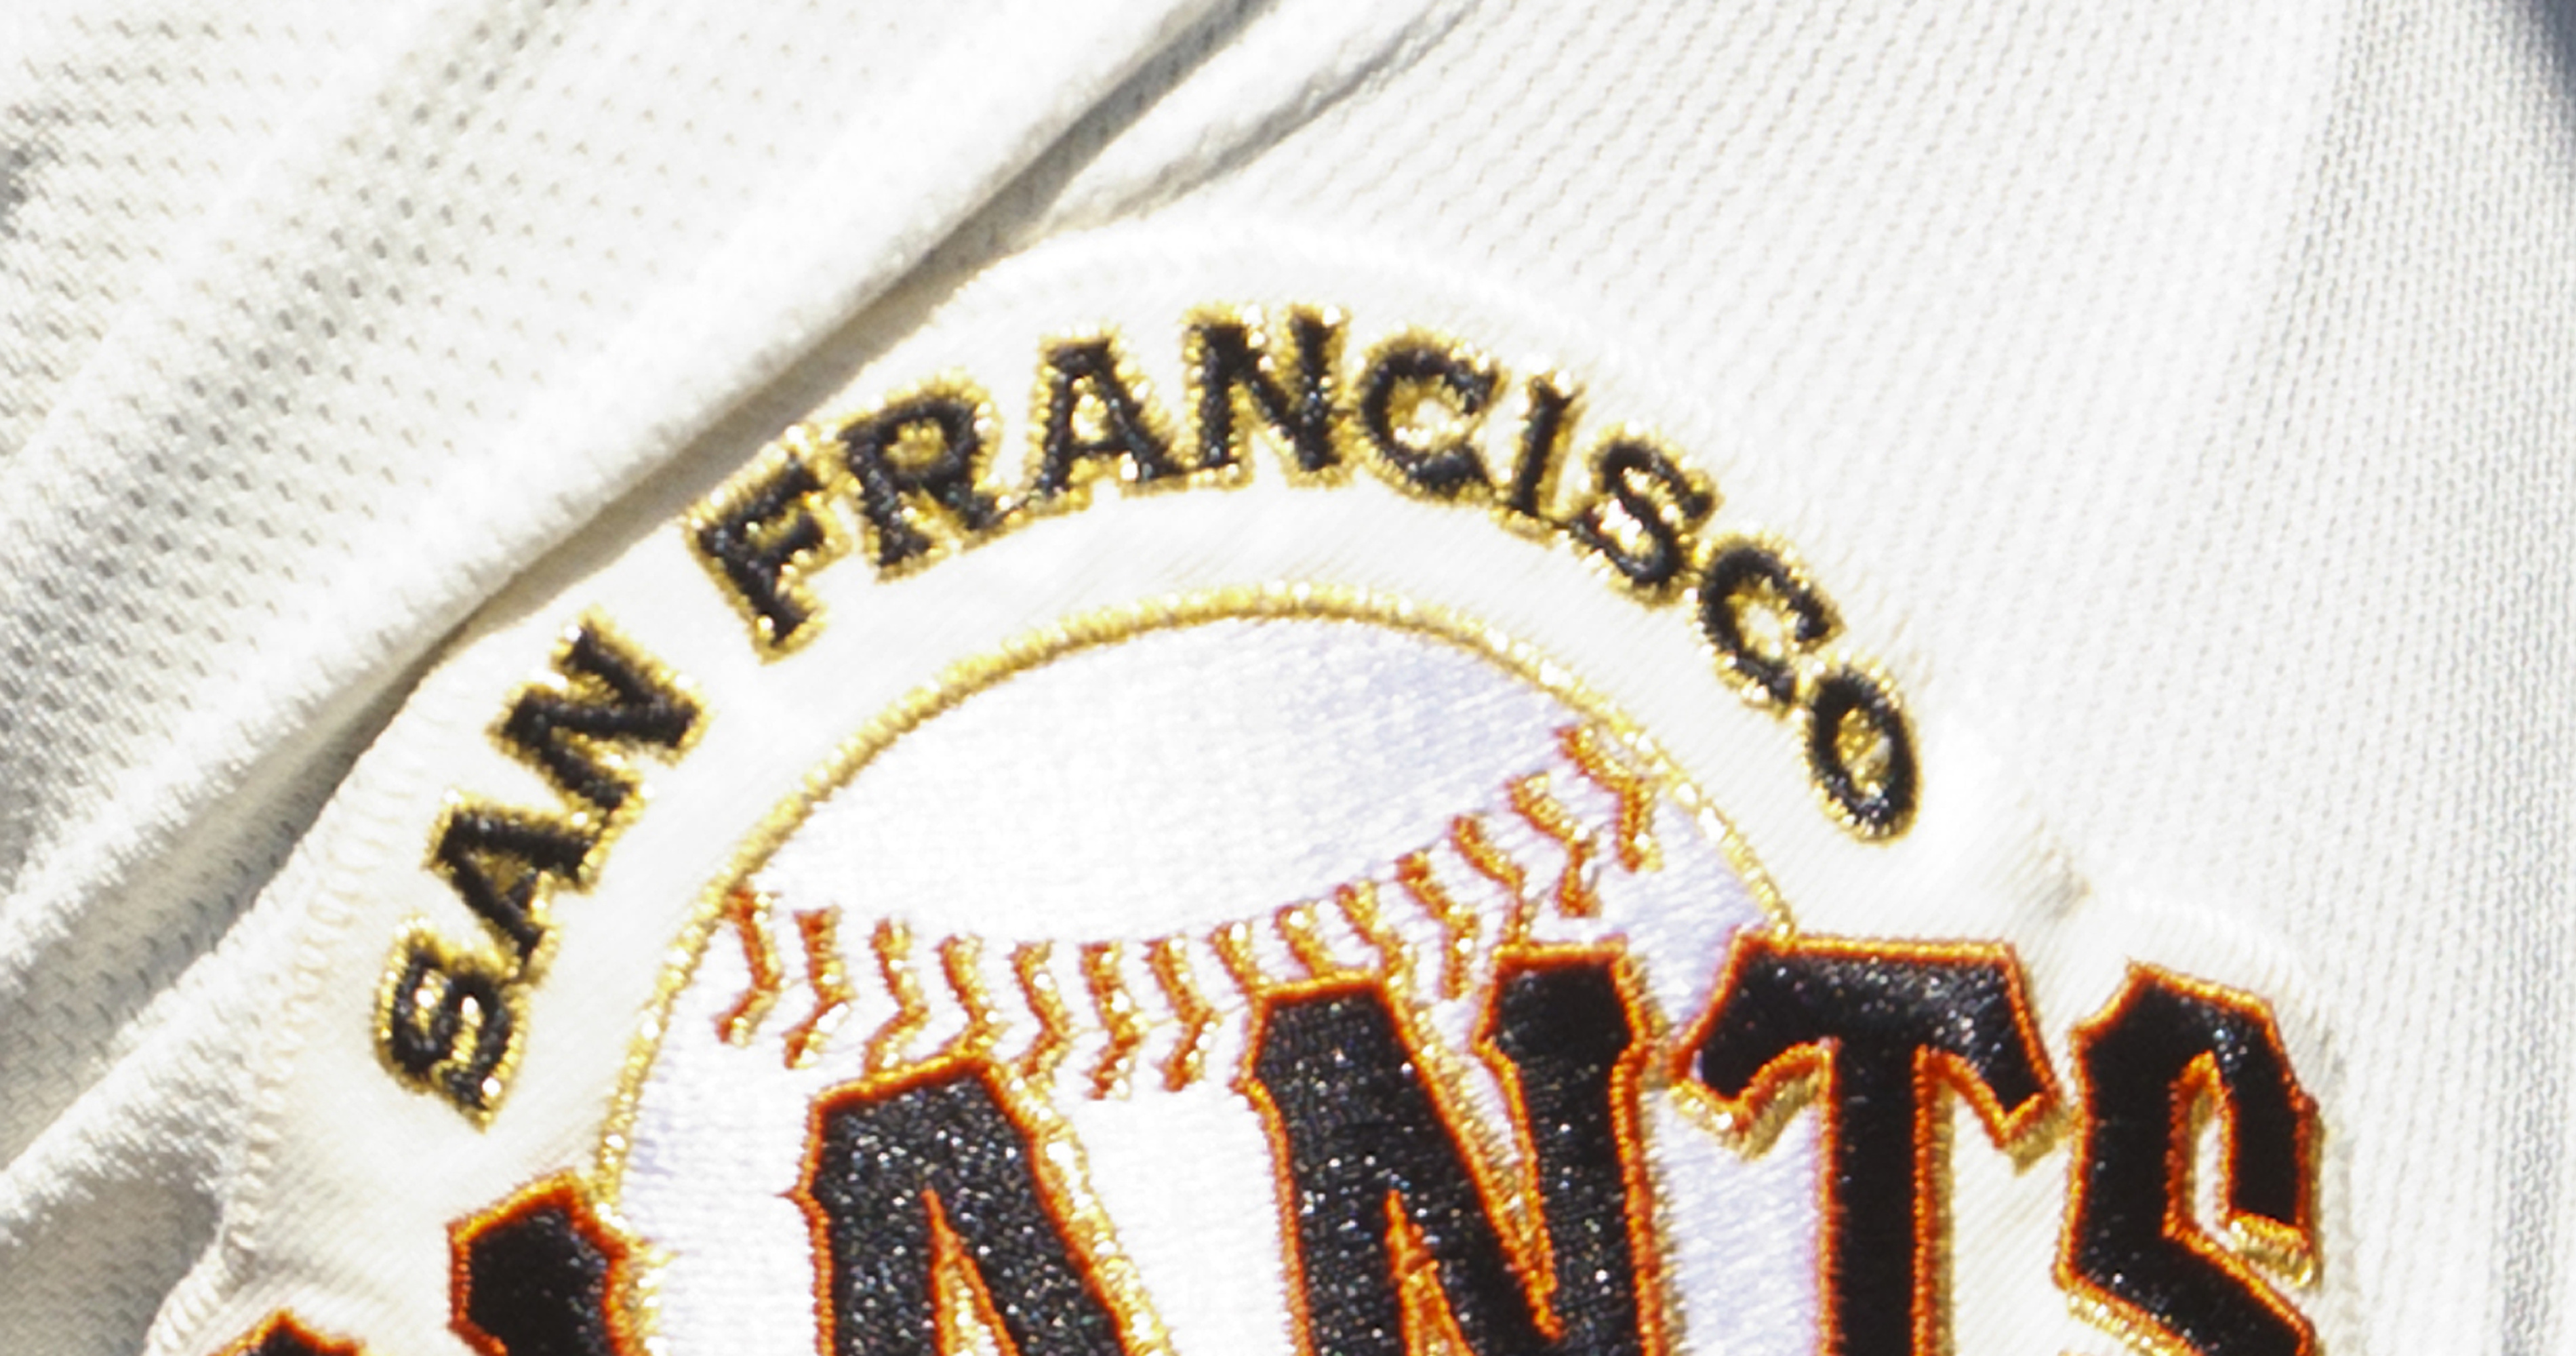 SF Giants Make Baseball History With Pride-Themed Uniforms & Caps